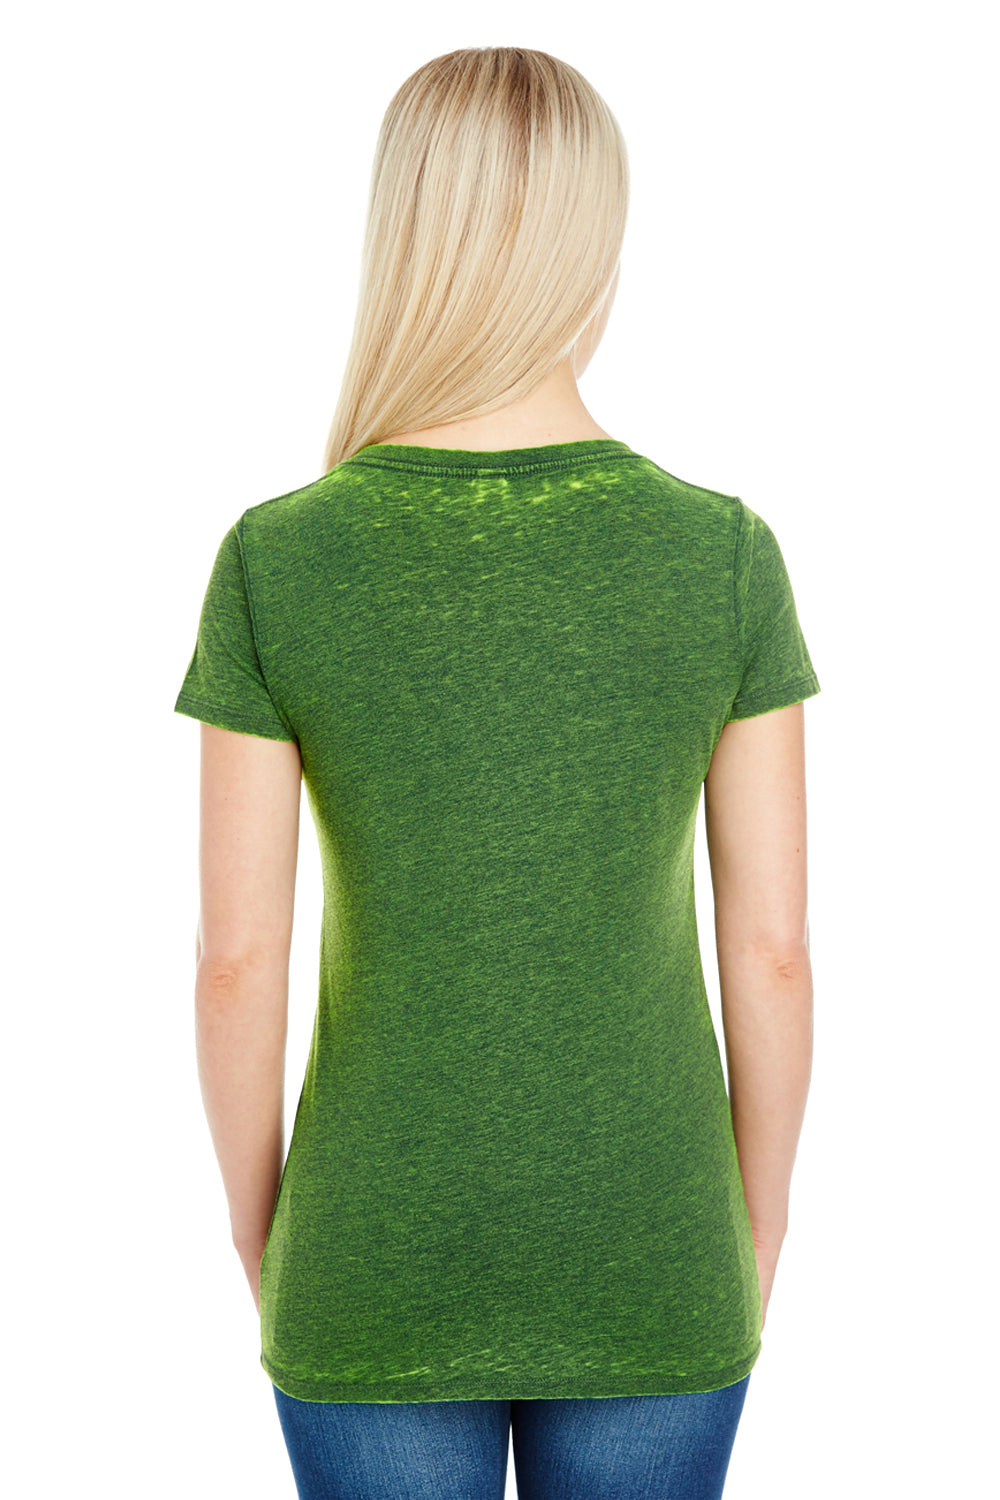 Threadfast Apparel 215B Womens Cross Dye Short Sleeve V-Neck T-Shirt Emerald Green Back